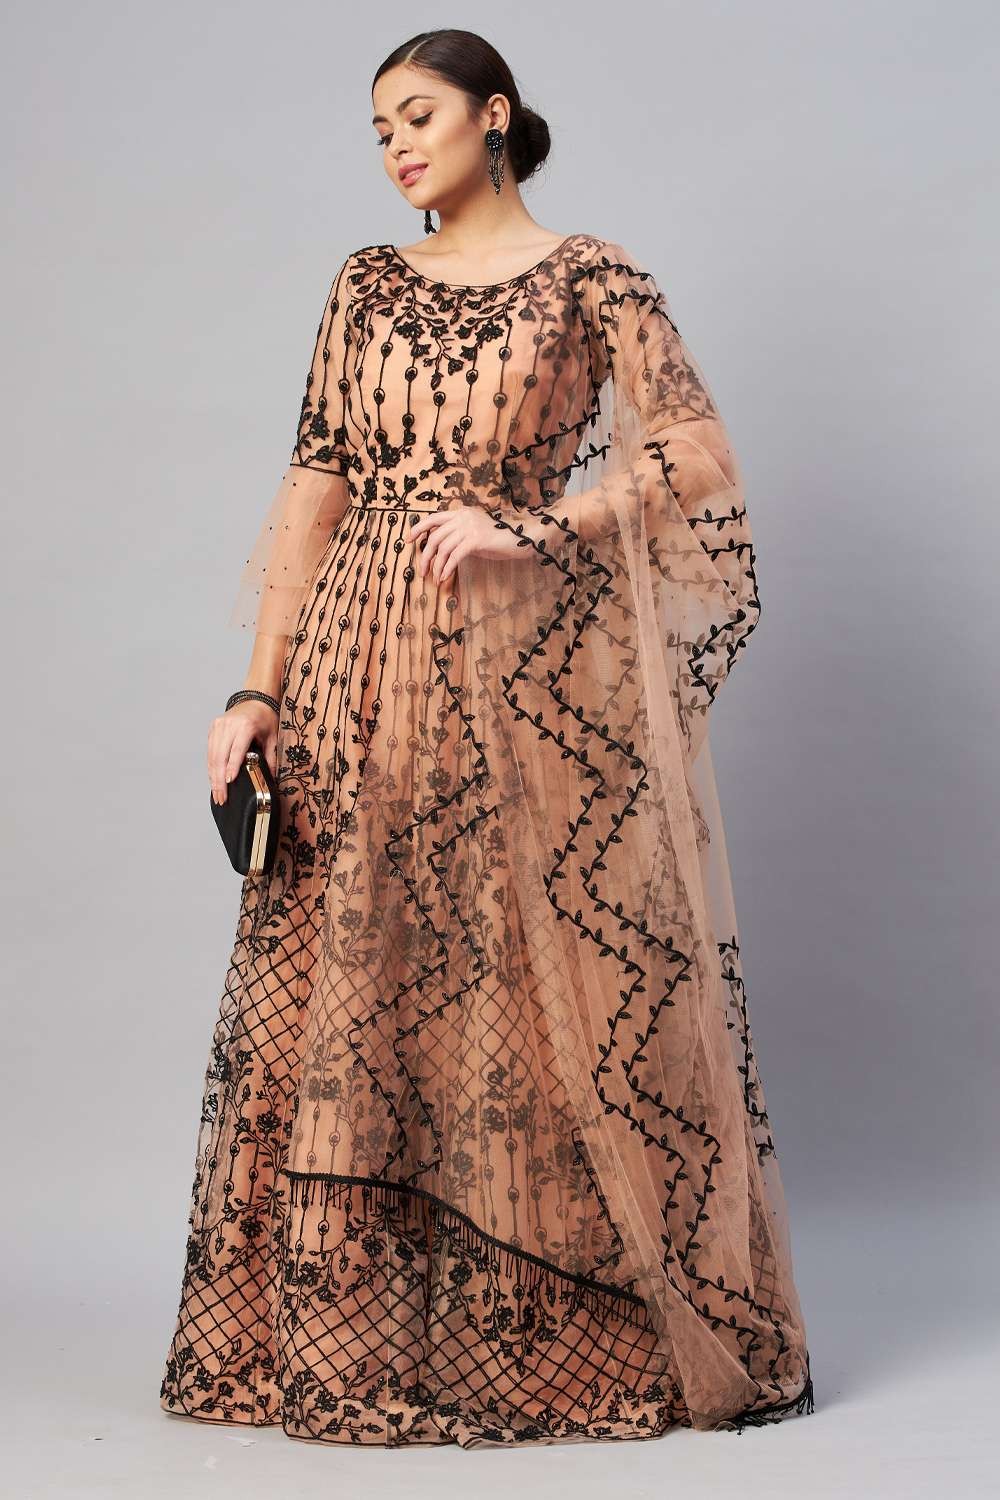 Plain net fabric gown design ideas | Gown dress design ideas | Gown designs  2021 - YouTube